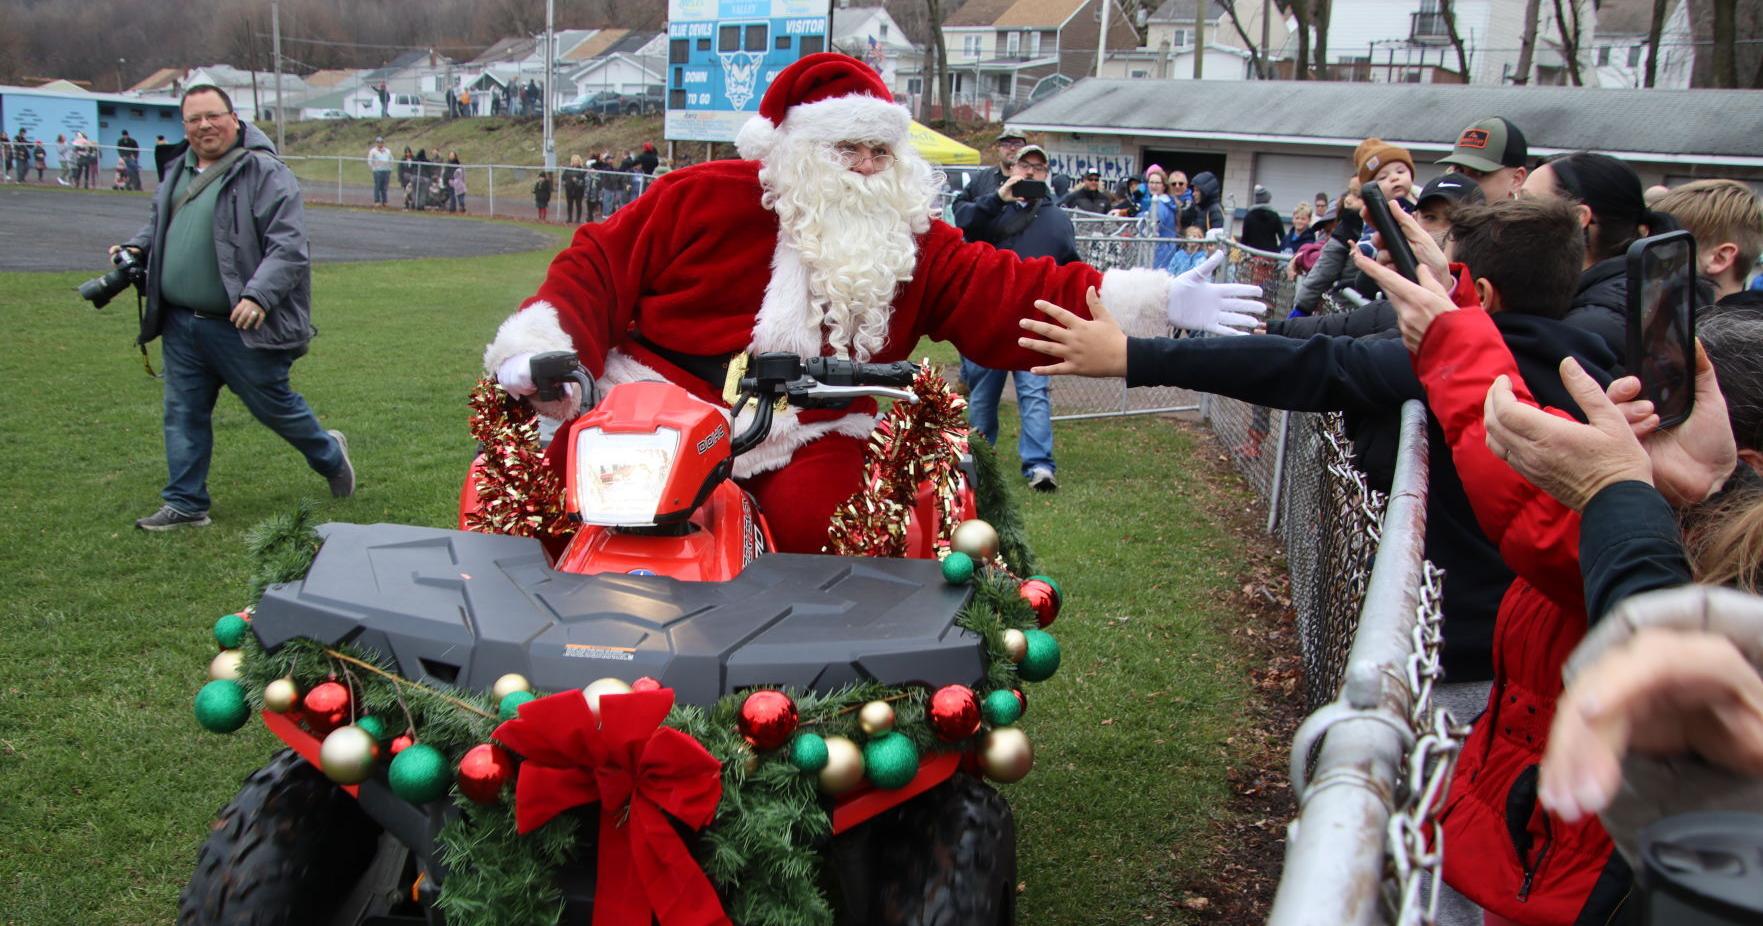 Despite weather nixing skydive, Santa makes entrance in Shenandoah